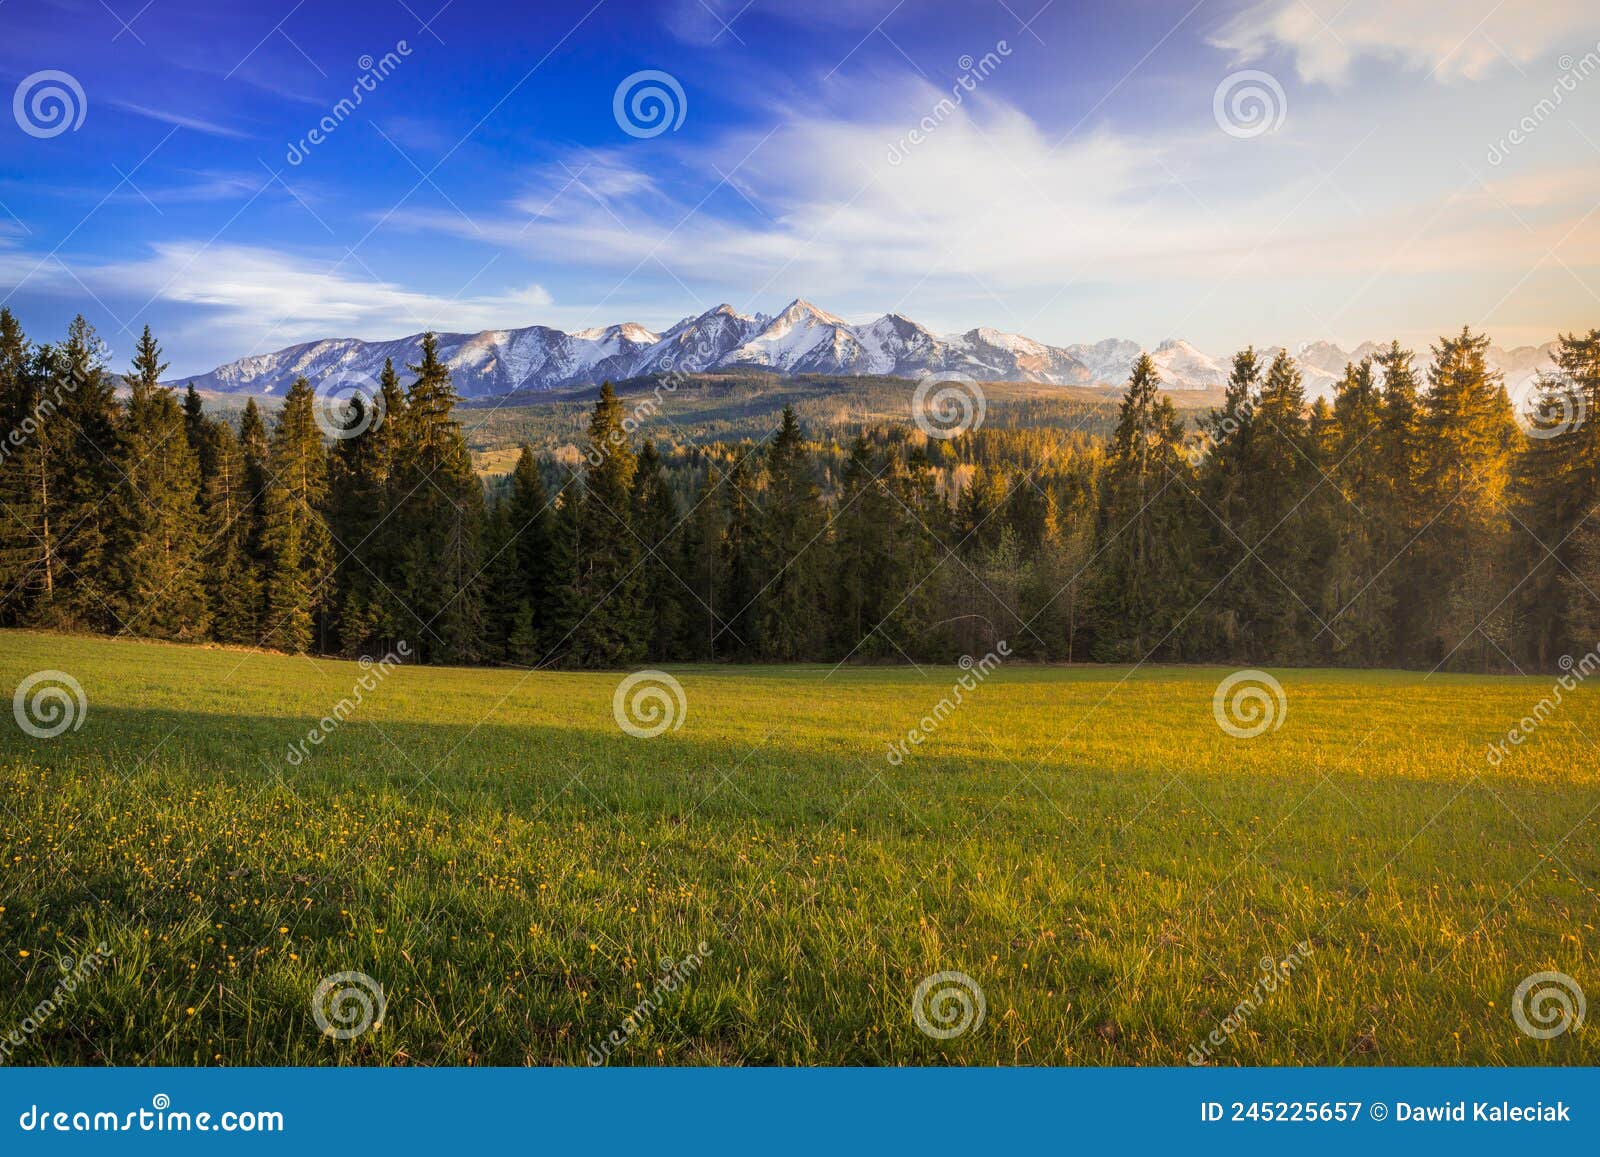 tatra mountains at sunset